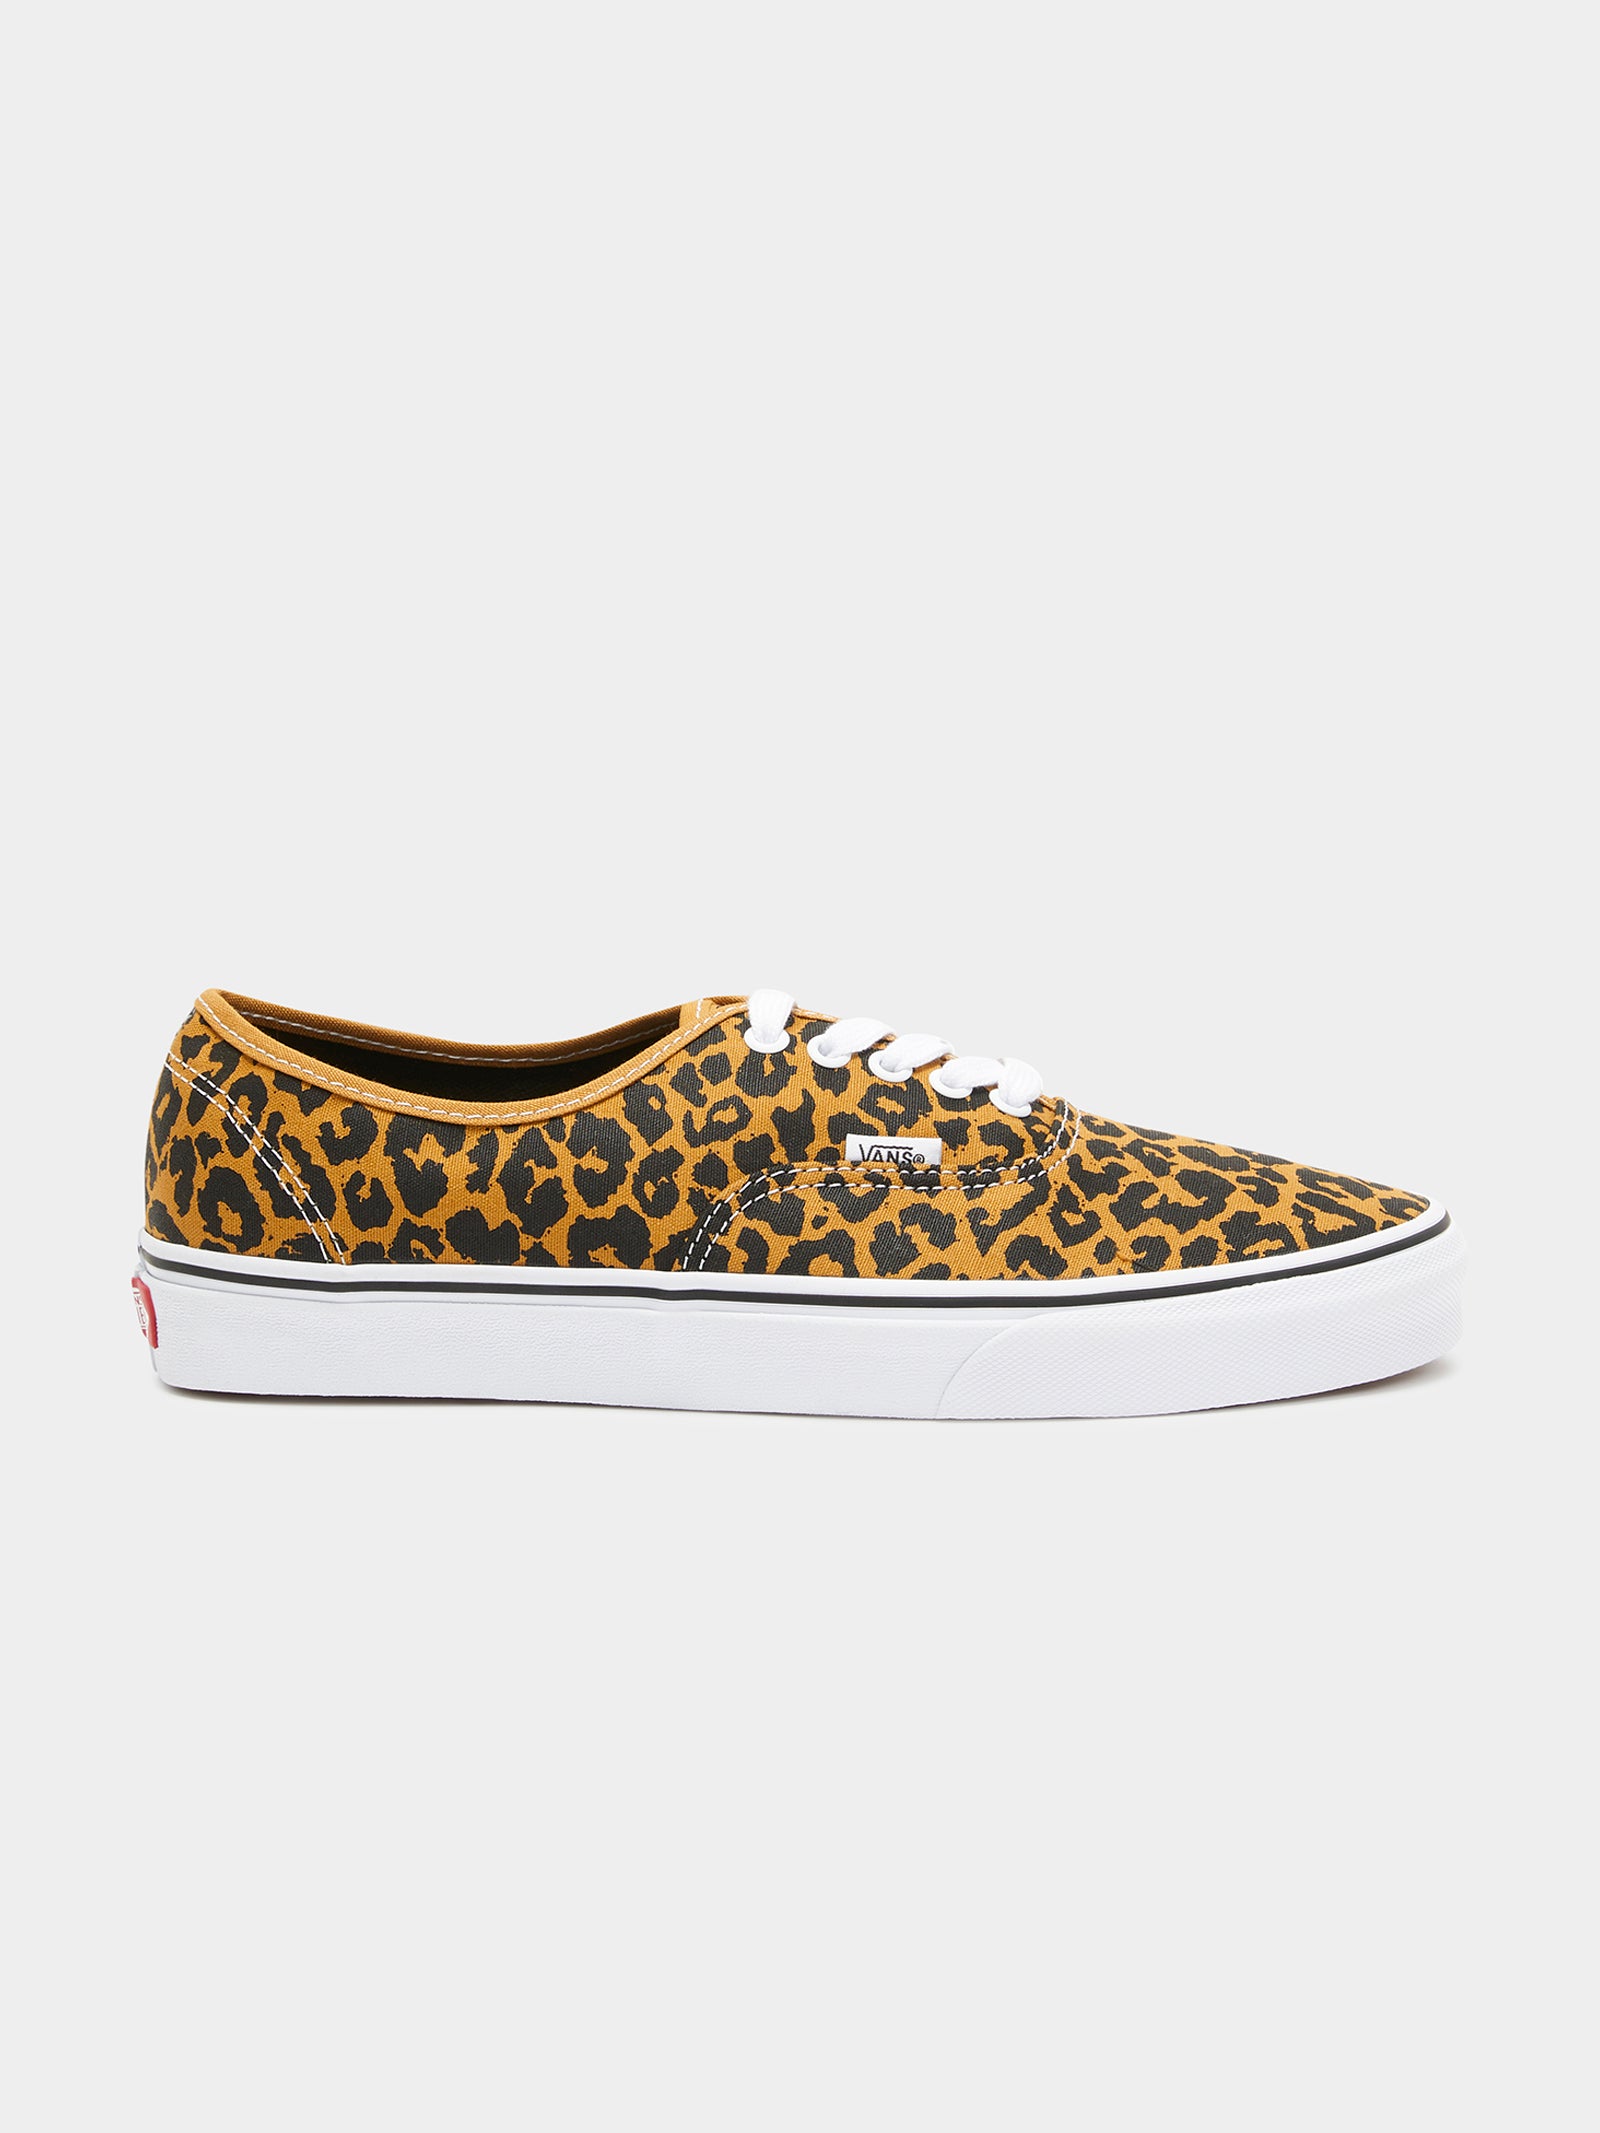 Unisex Authentic Leopard Sneakers in Leopard Black & White